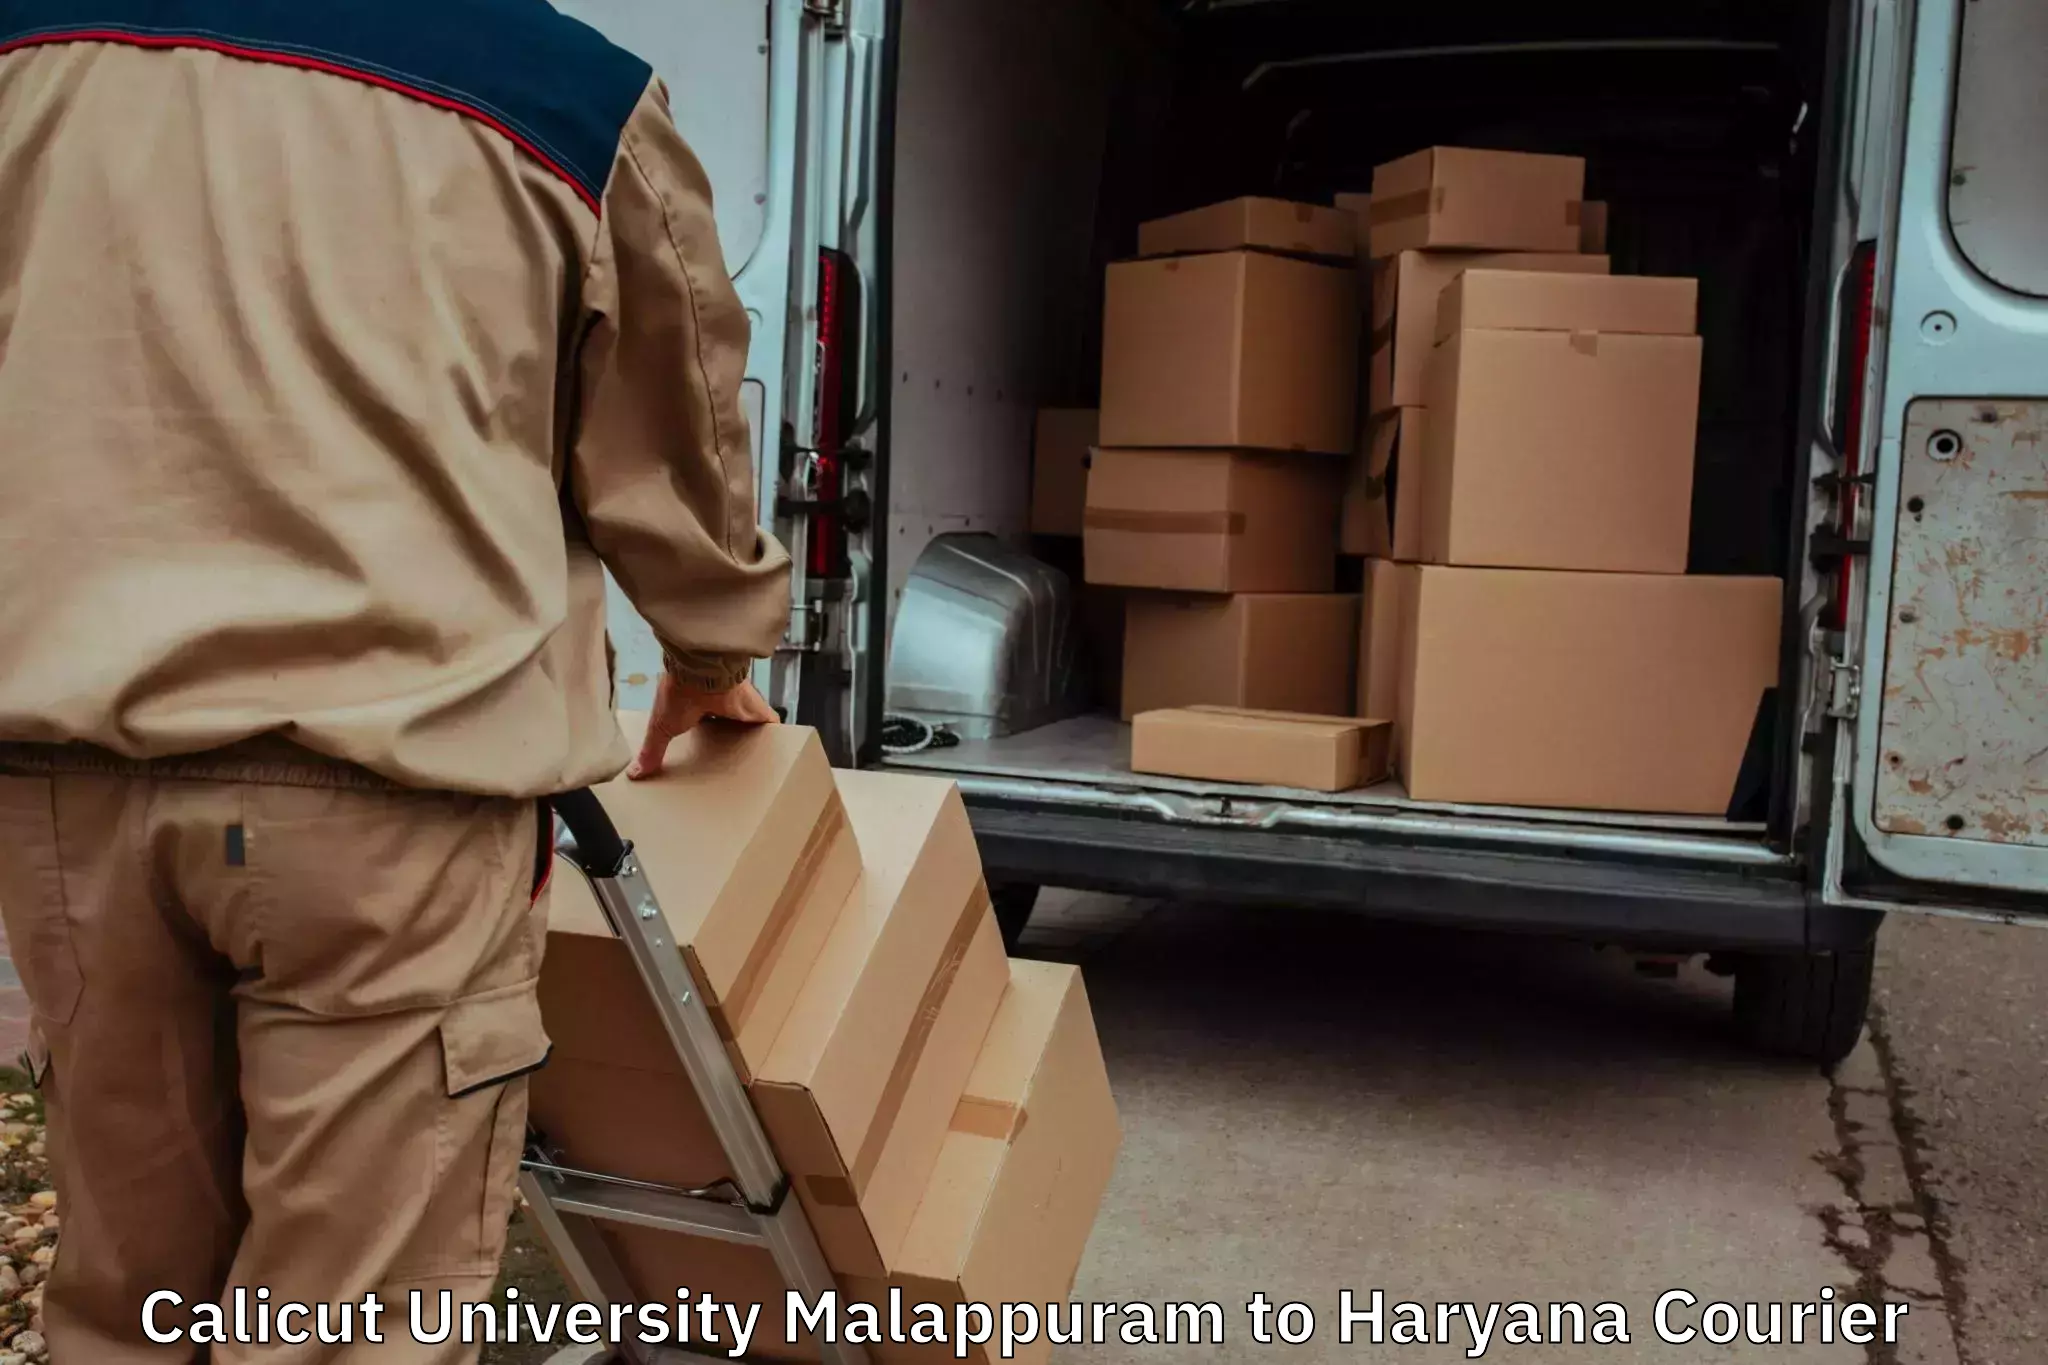 Professional moving company Calicut University Malappuram to Loharu